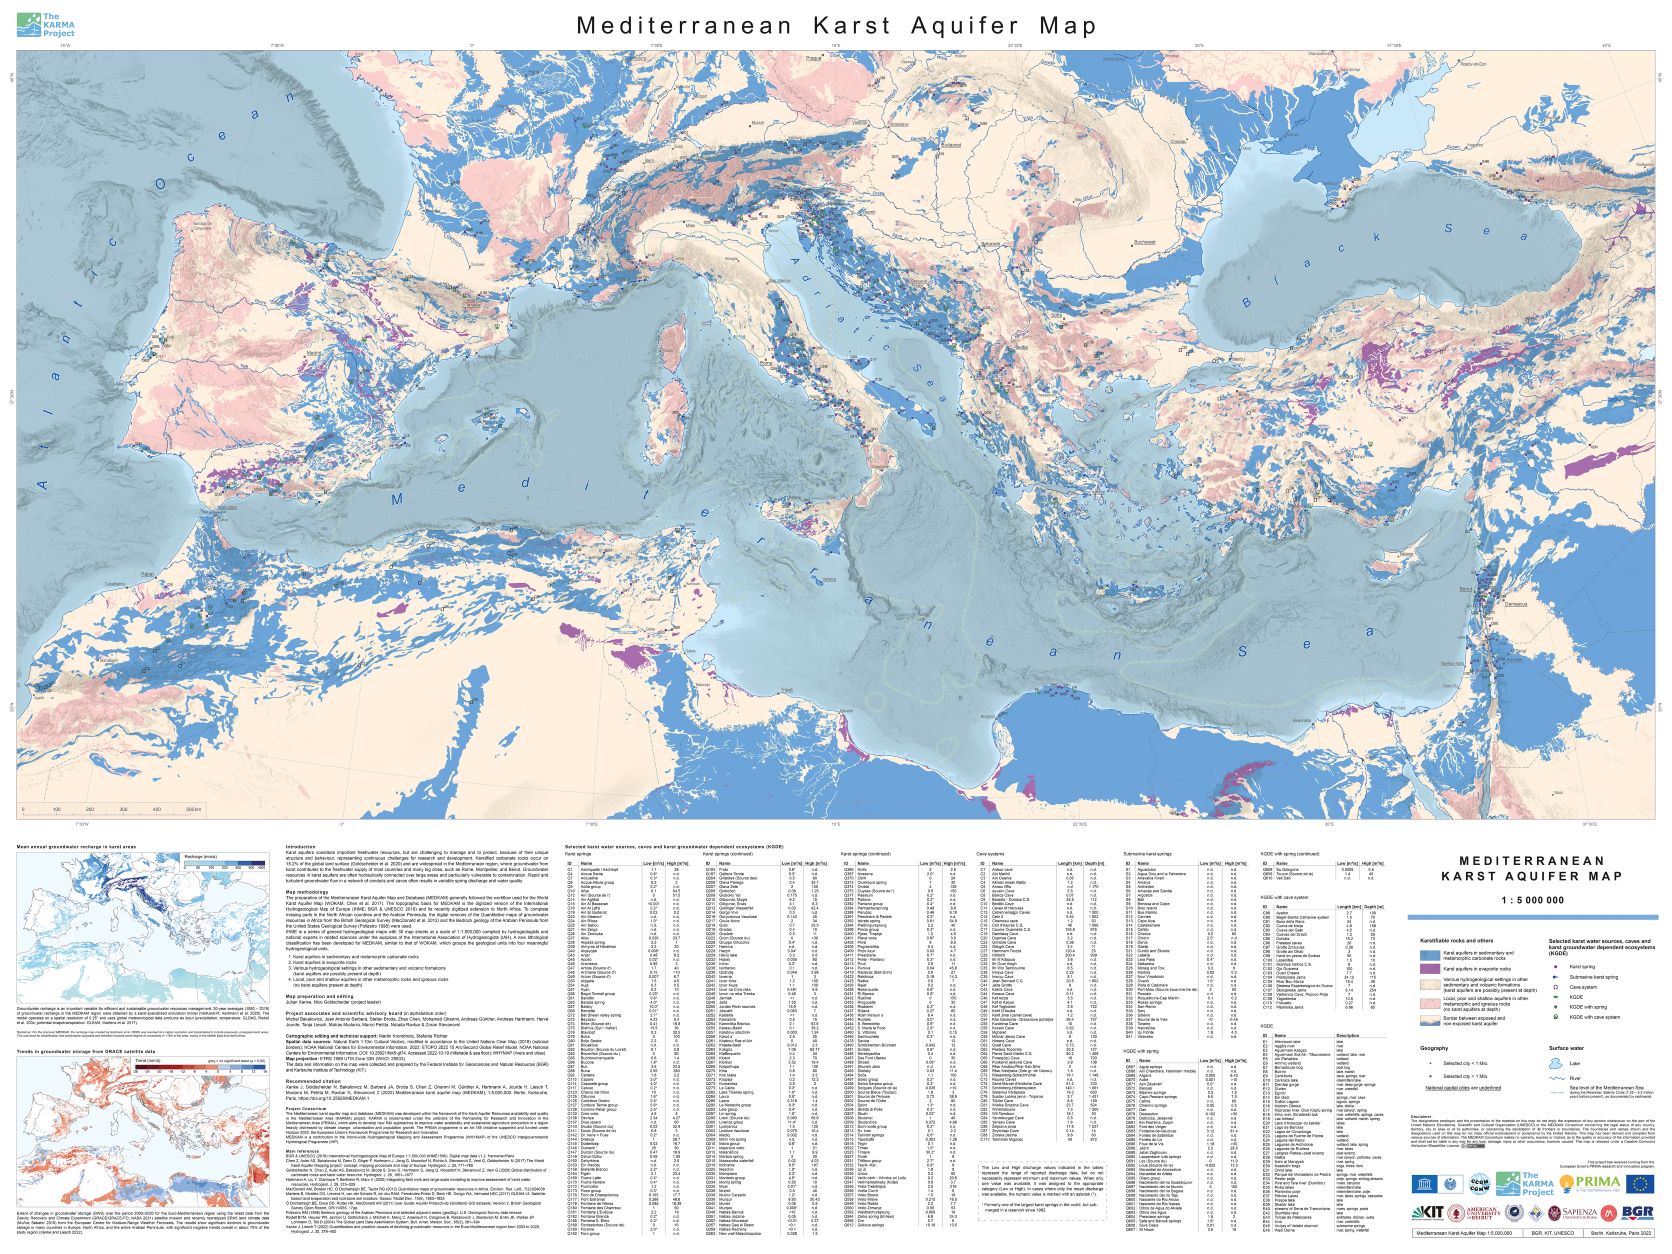 Mediterranean karst aquifer map